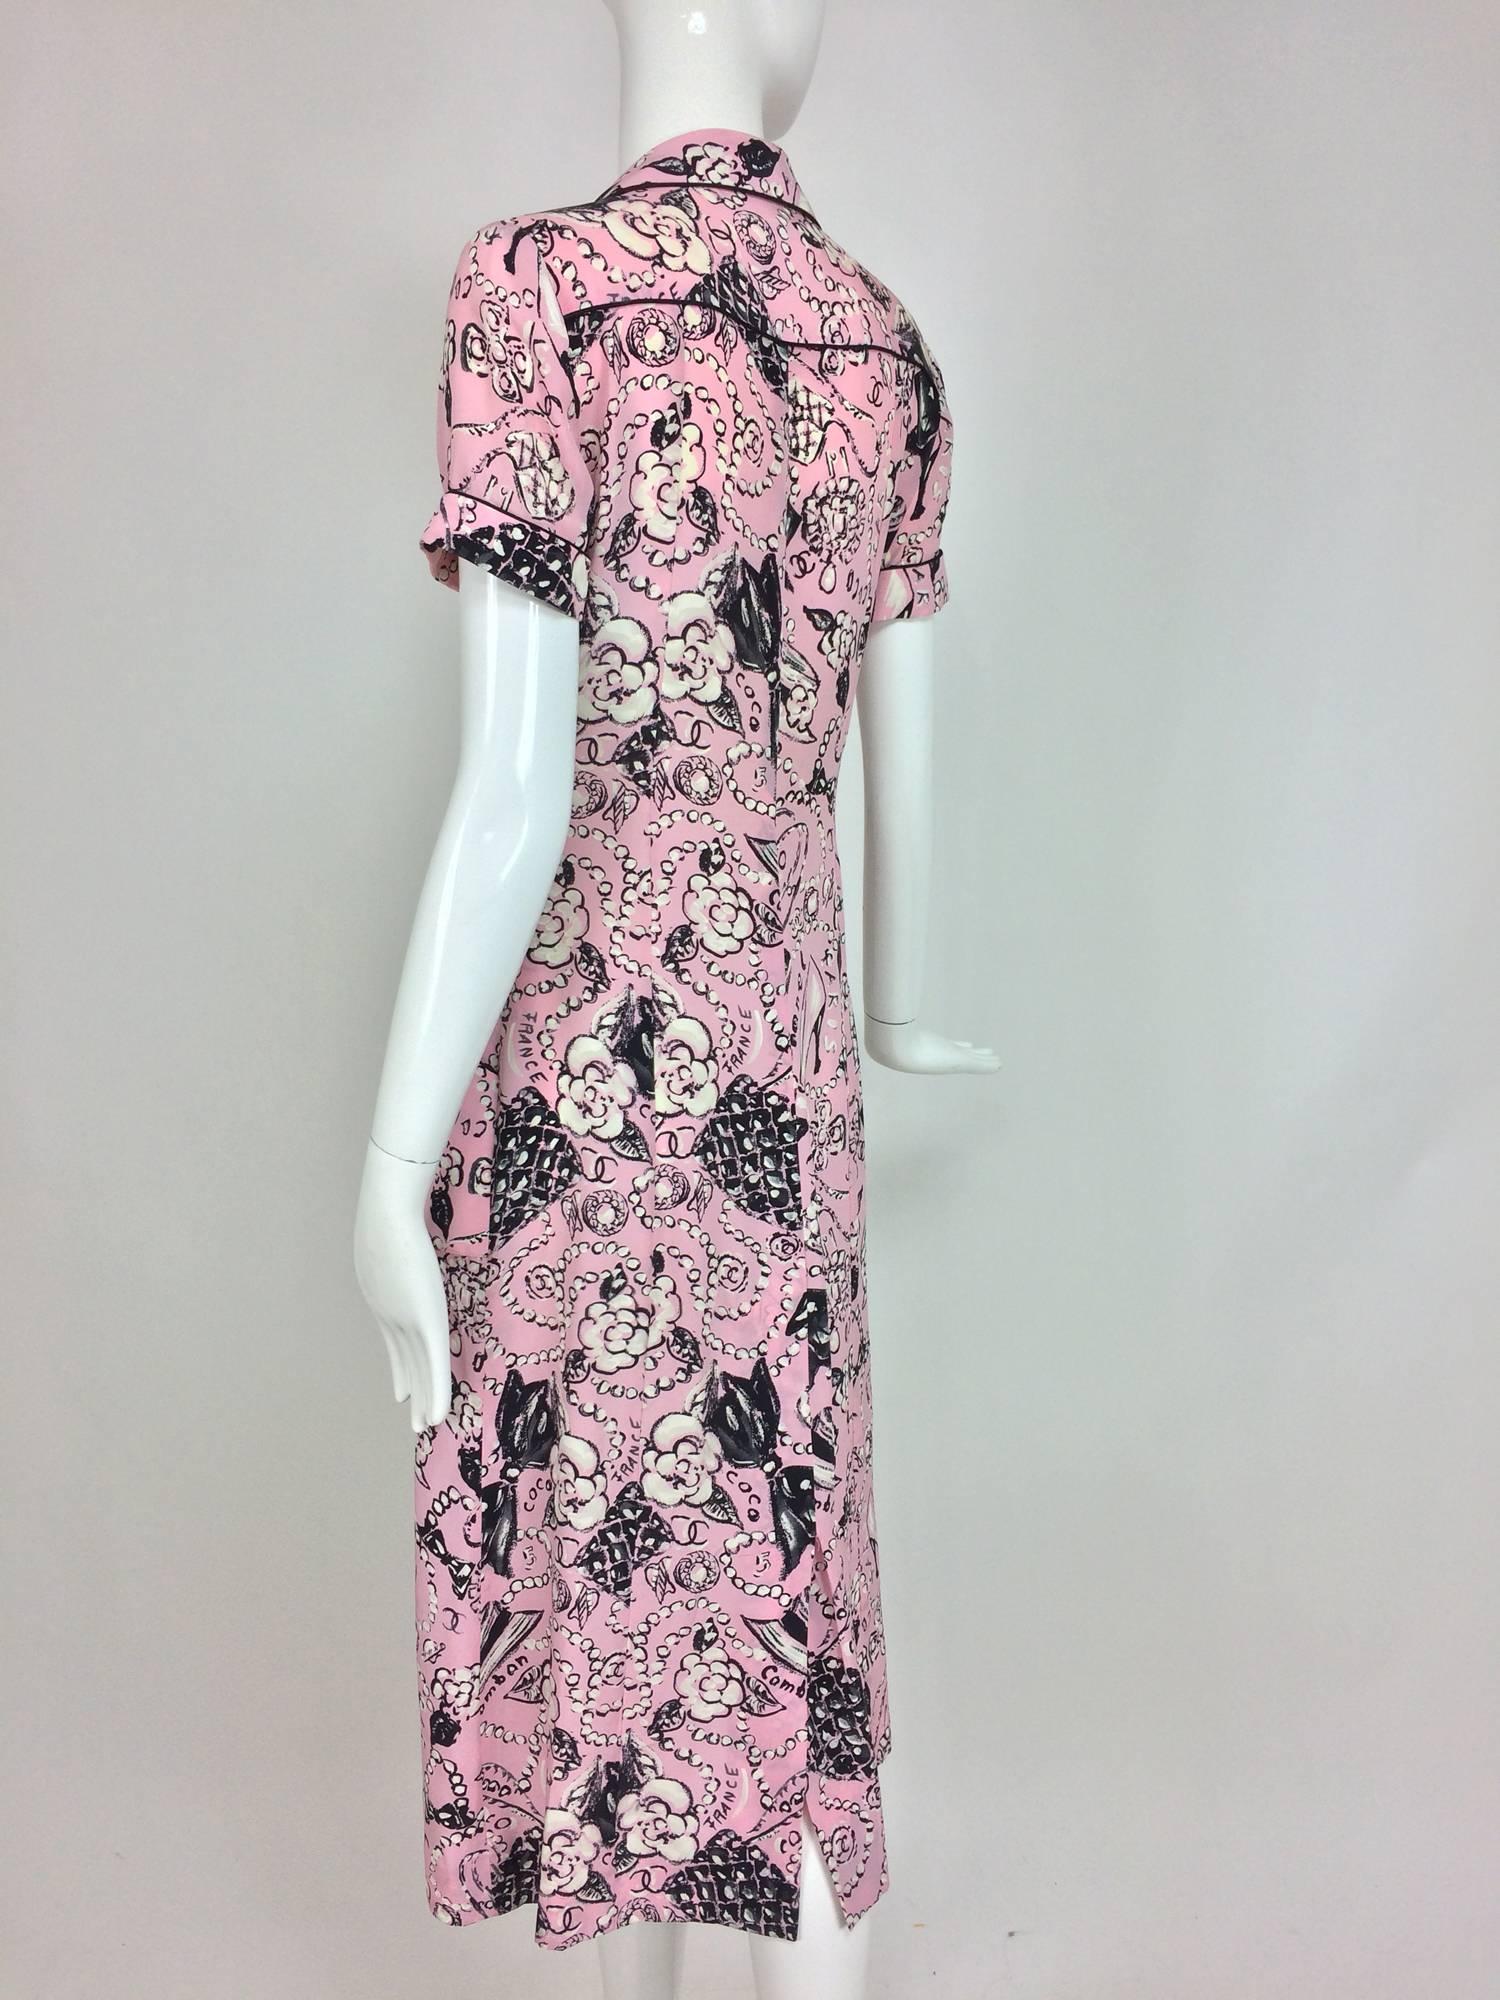 Women's Chanel Claudia Schiffer runway worn rare Coco print dress pink silk 1993